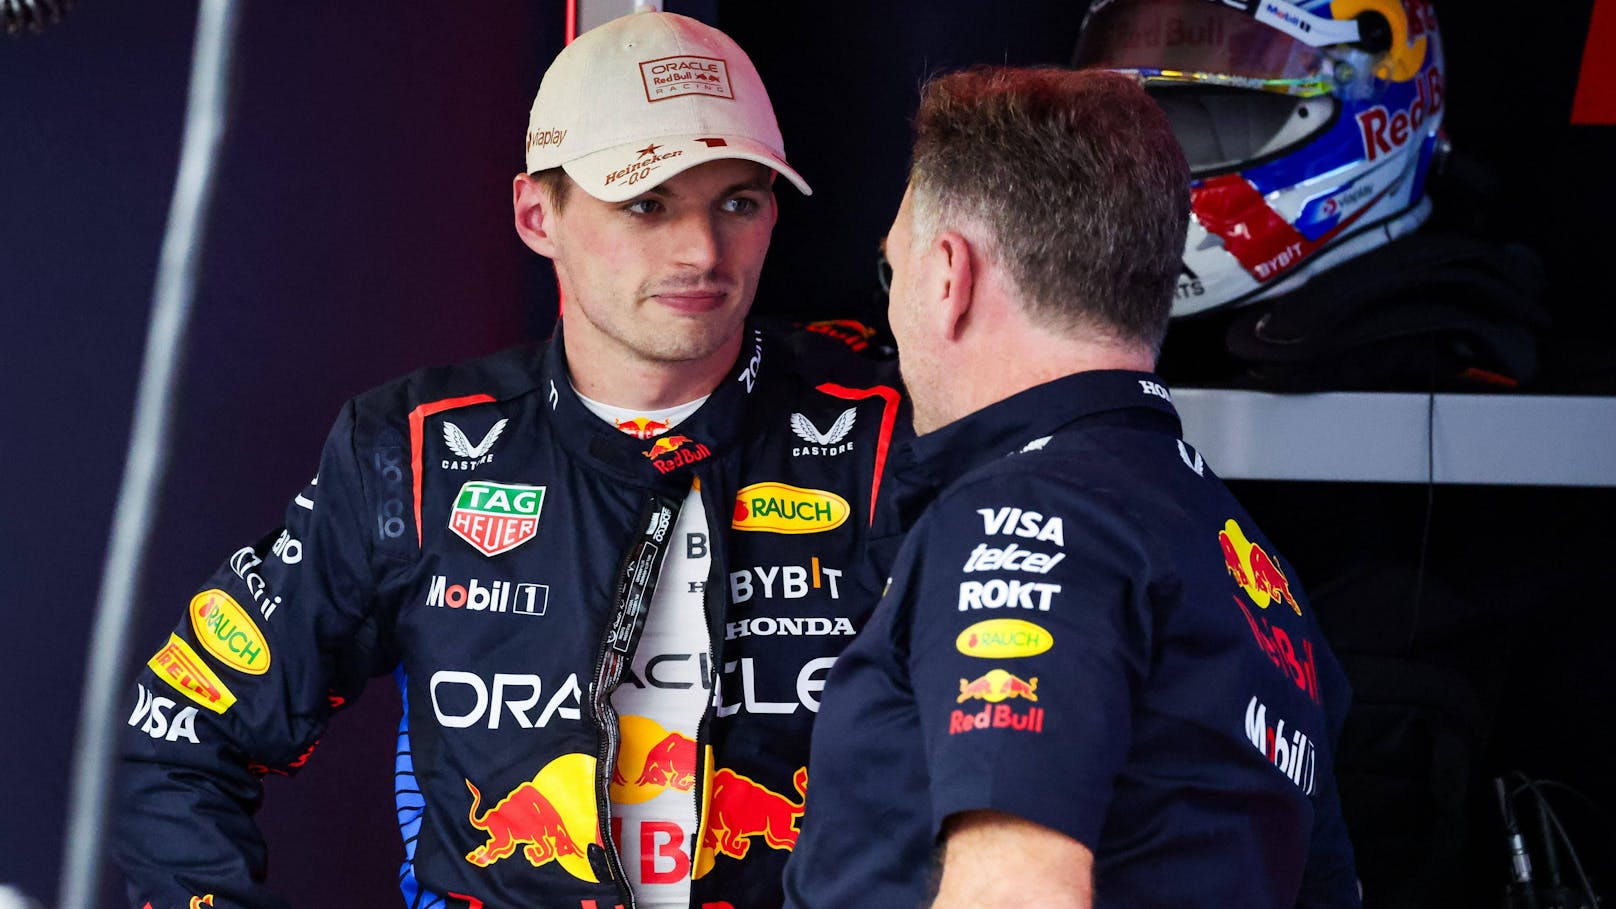 Red-Bull-Boss kontert Kritik: "Kein schlechtes Auto"